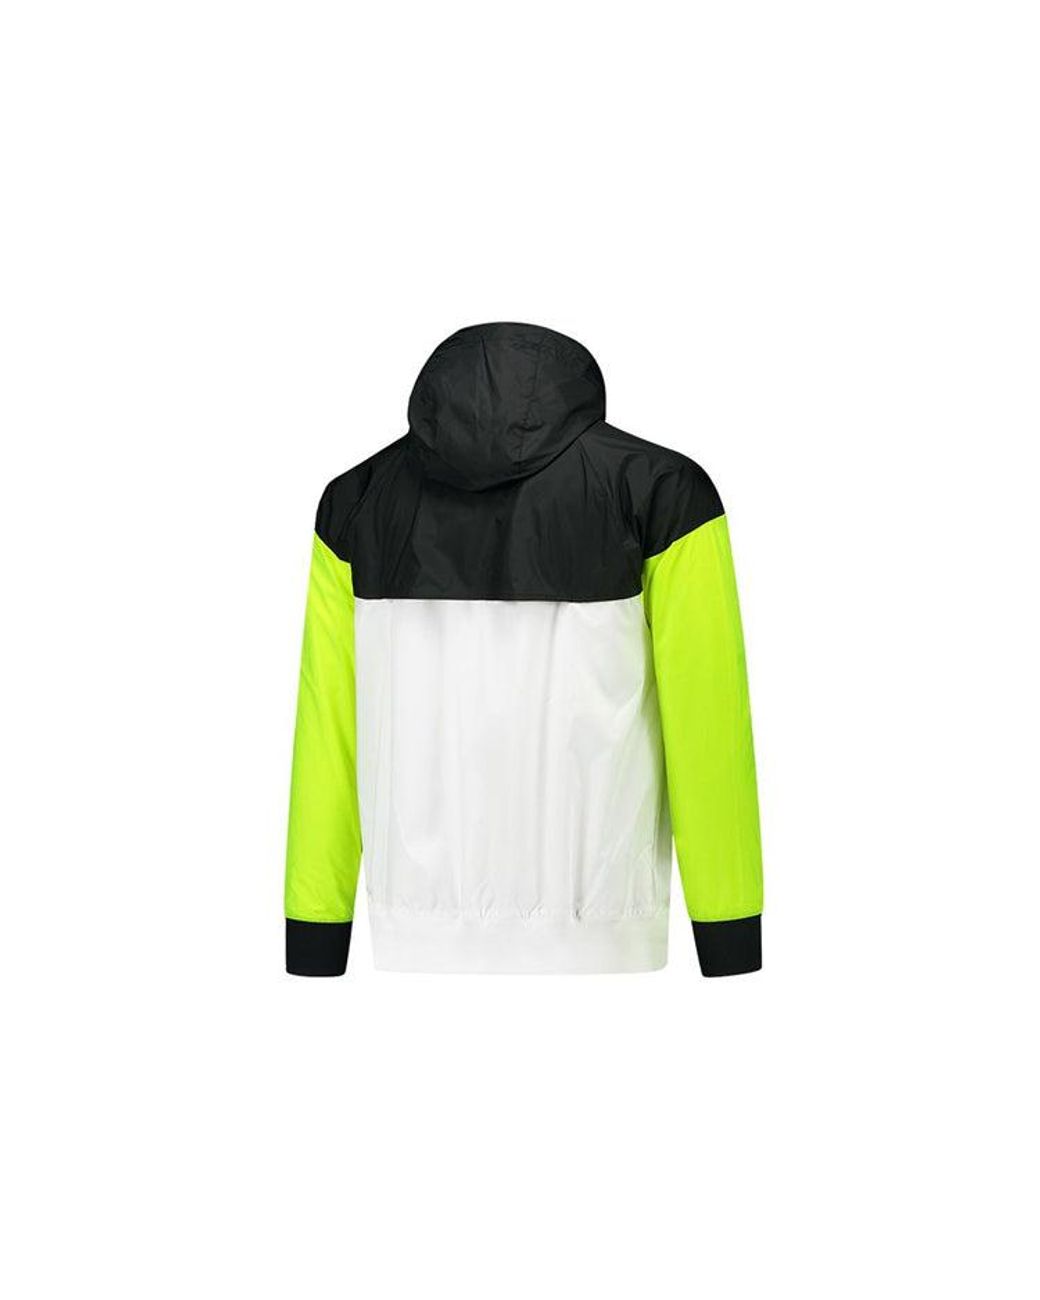 Nike Ss20 Sportswear Windrunner Green for Men | Lyst